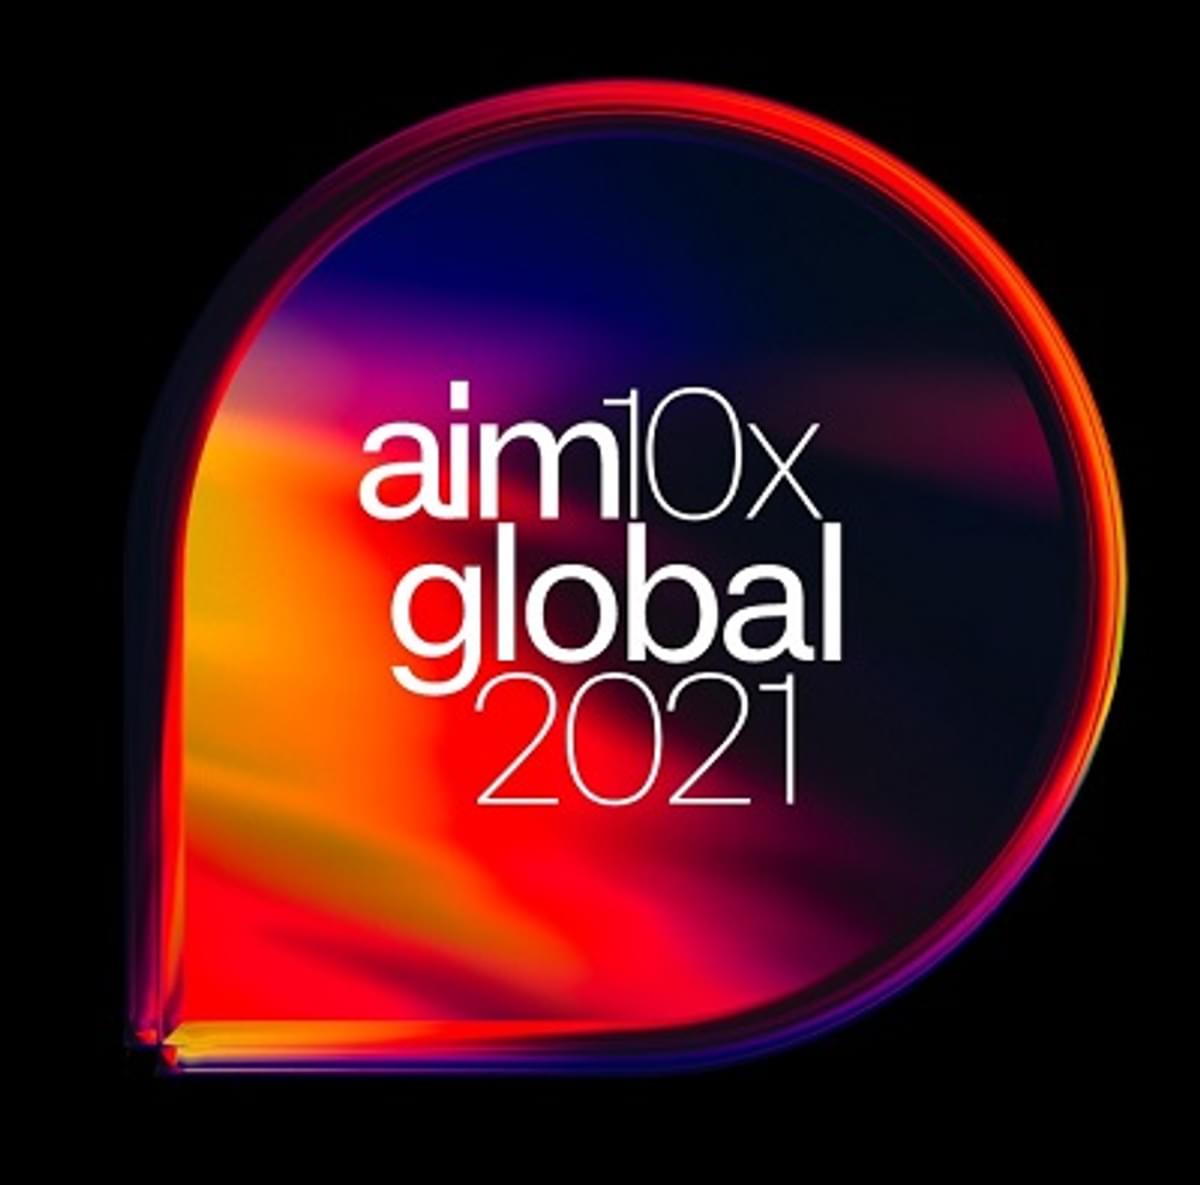 AIM10x Global 2021 event image